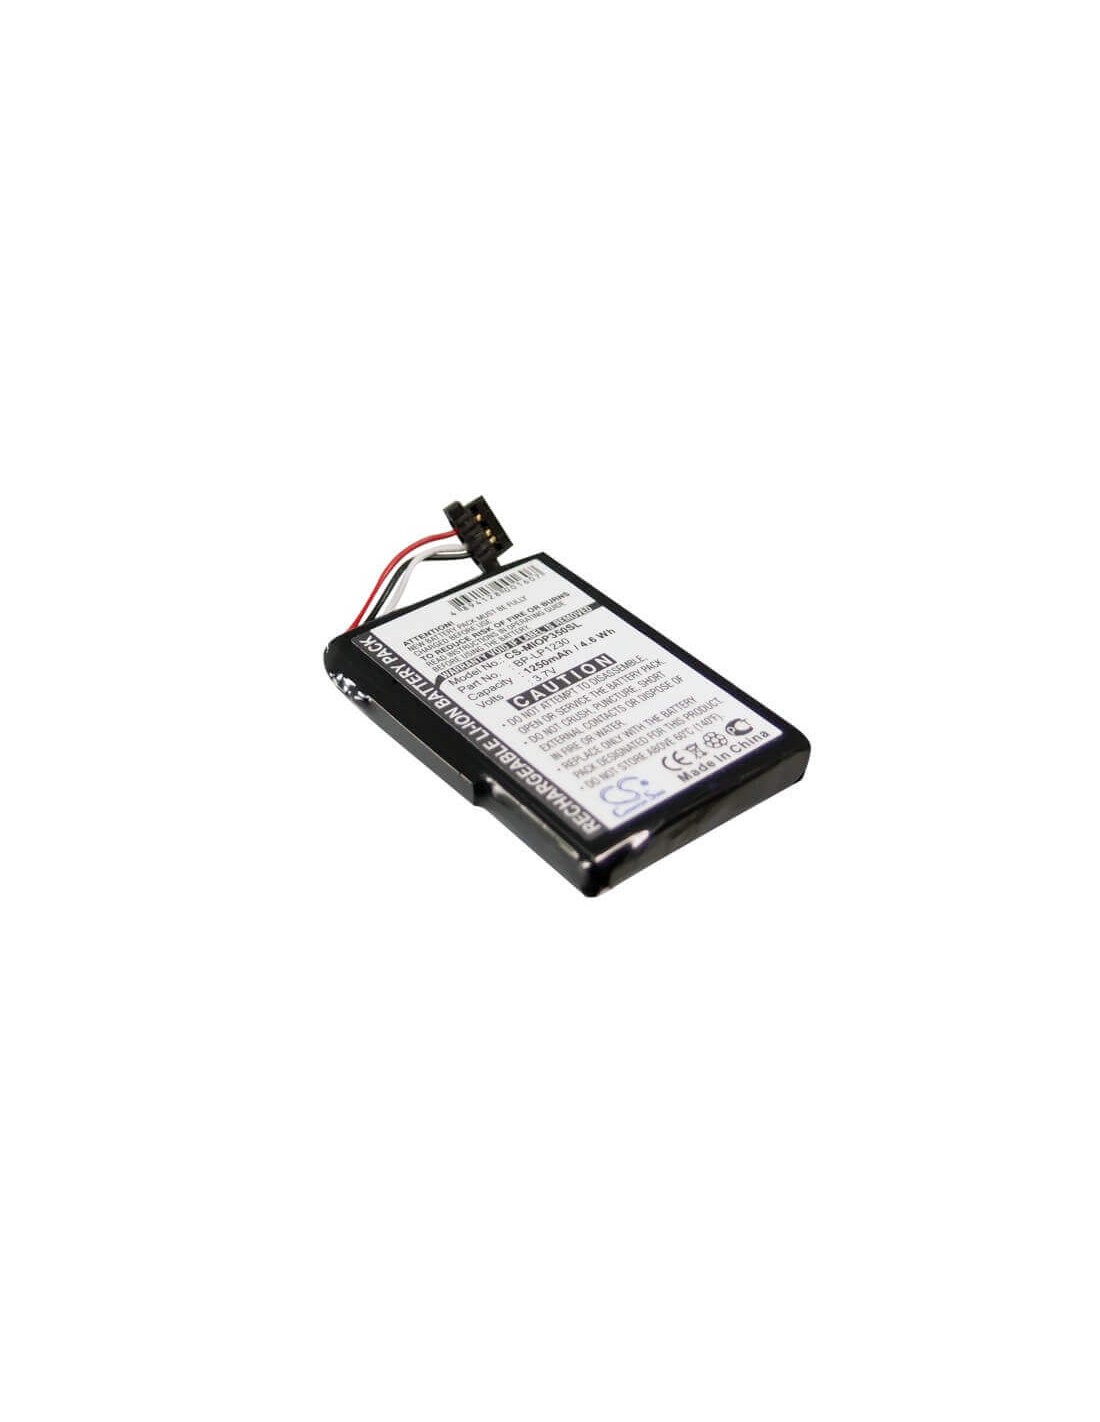 Battery for Navman Pin, Praktiker Looxmedia 6500, 3.7V, 1250mAh - 4.63Wh